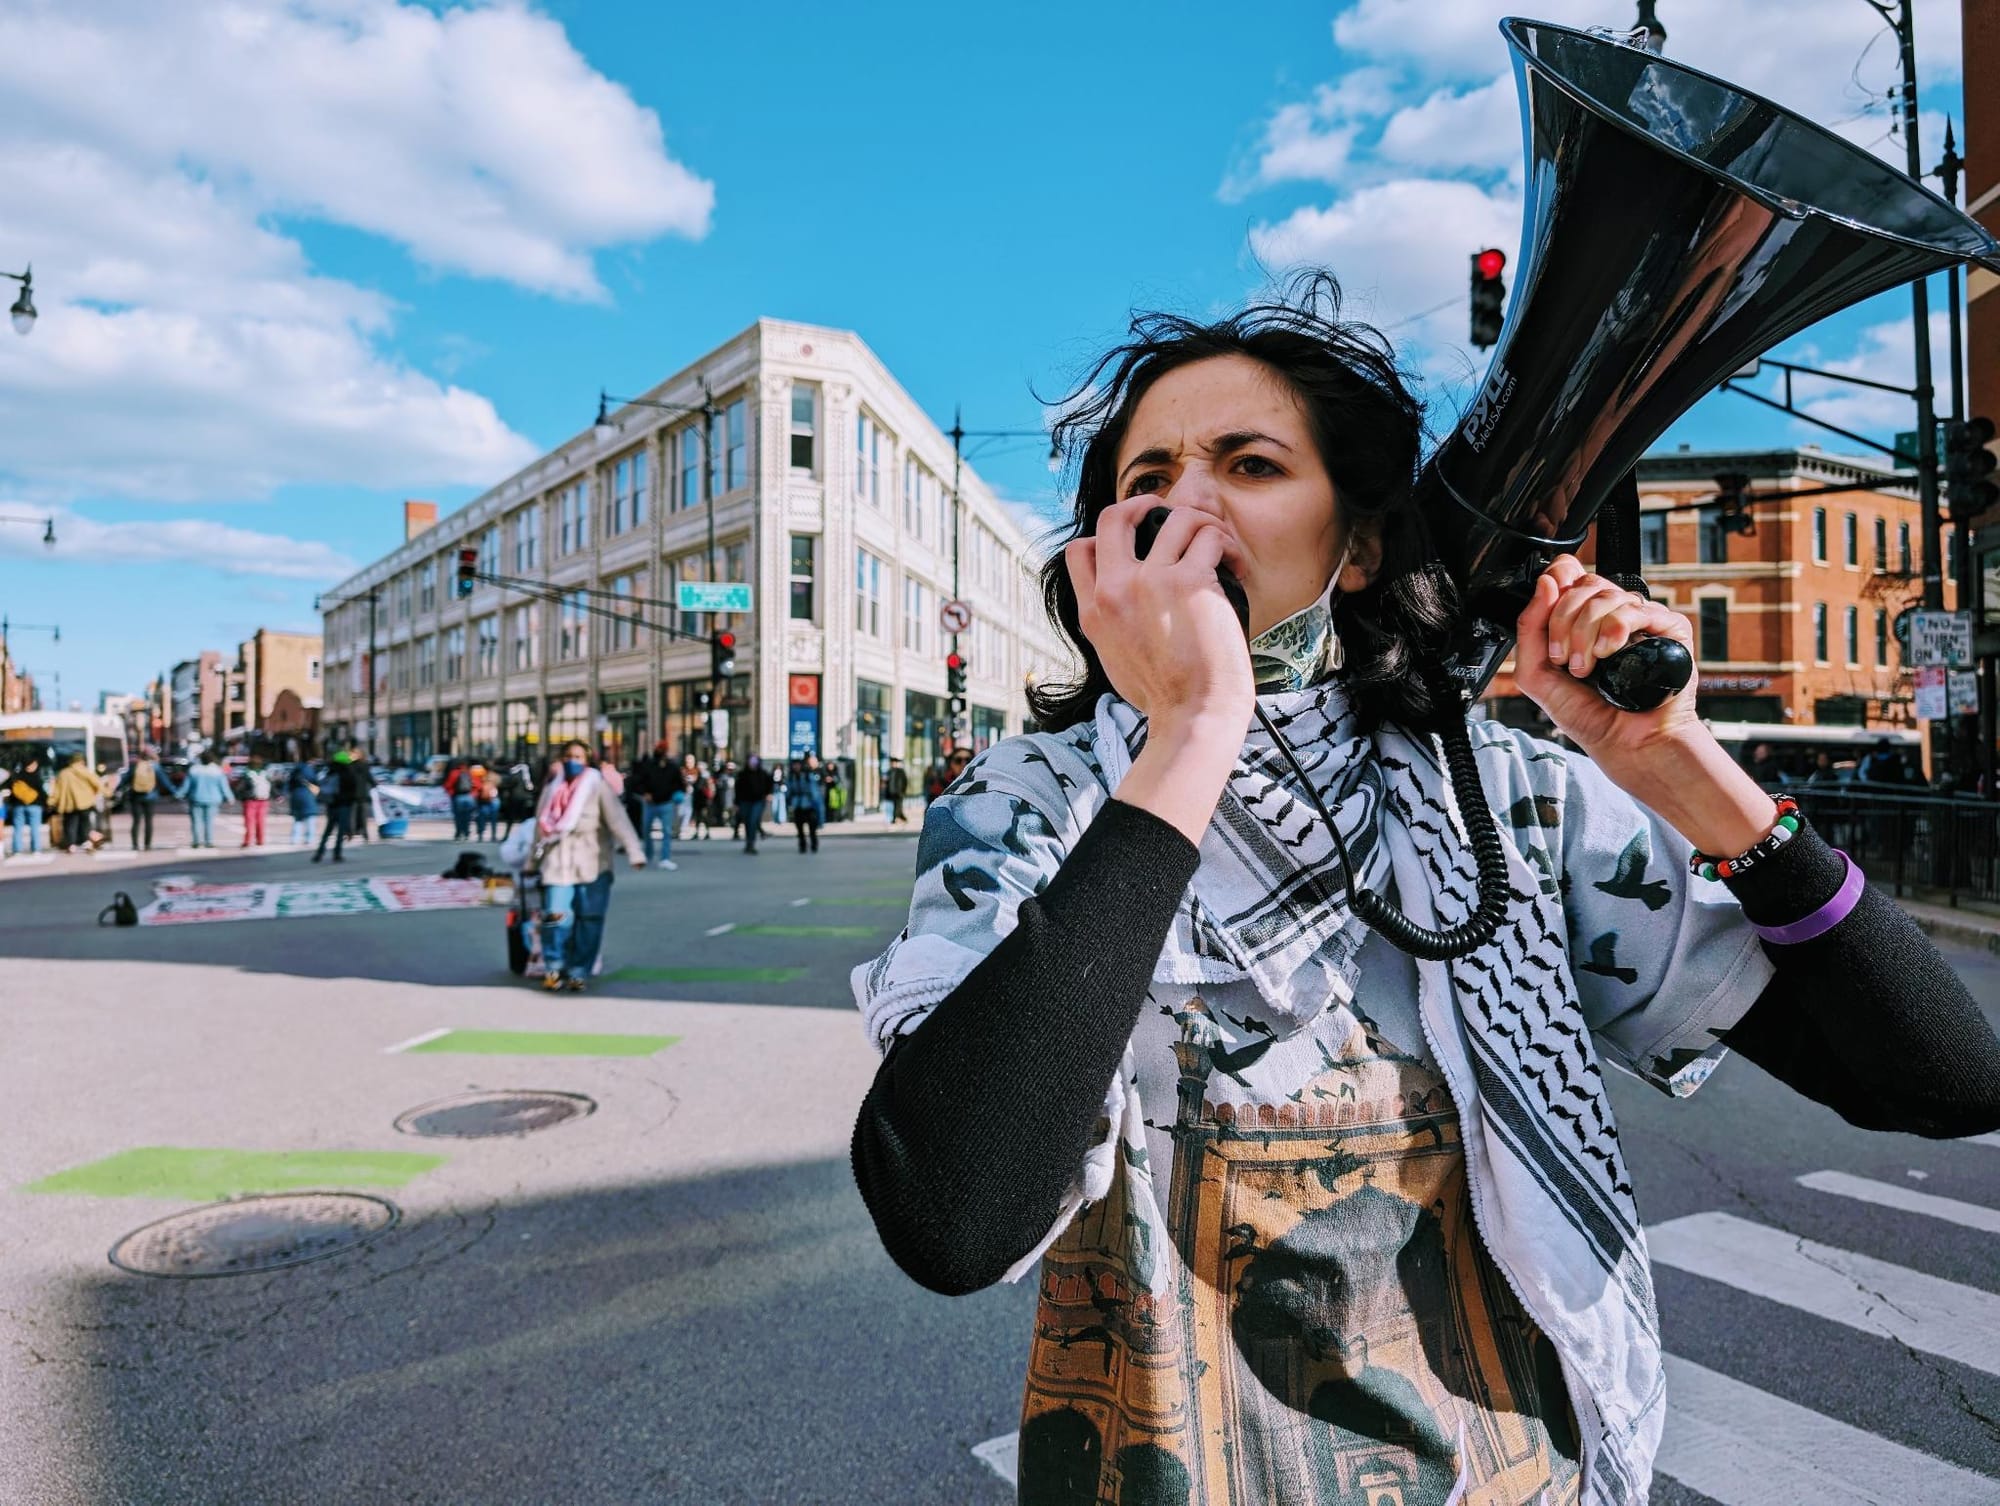 A protester wearing a keffiyeh speaks through a bullhorn in the street.